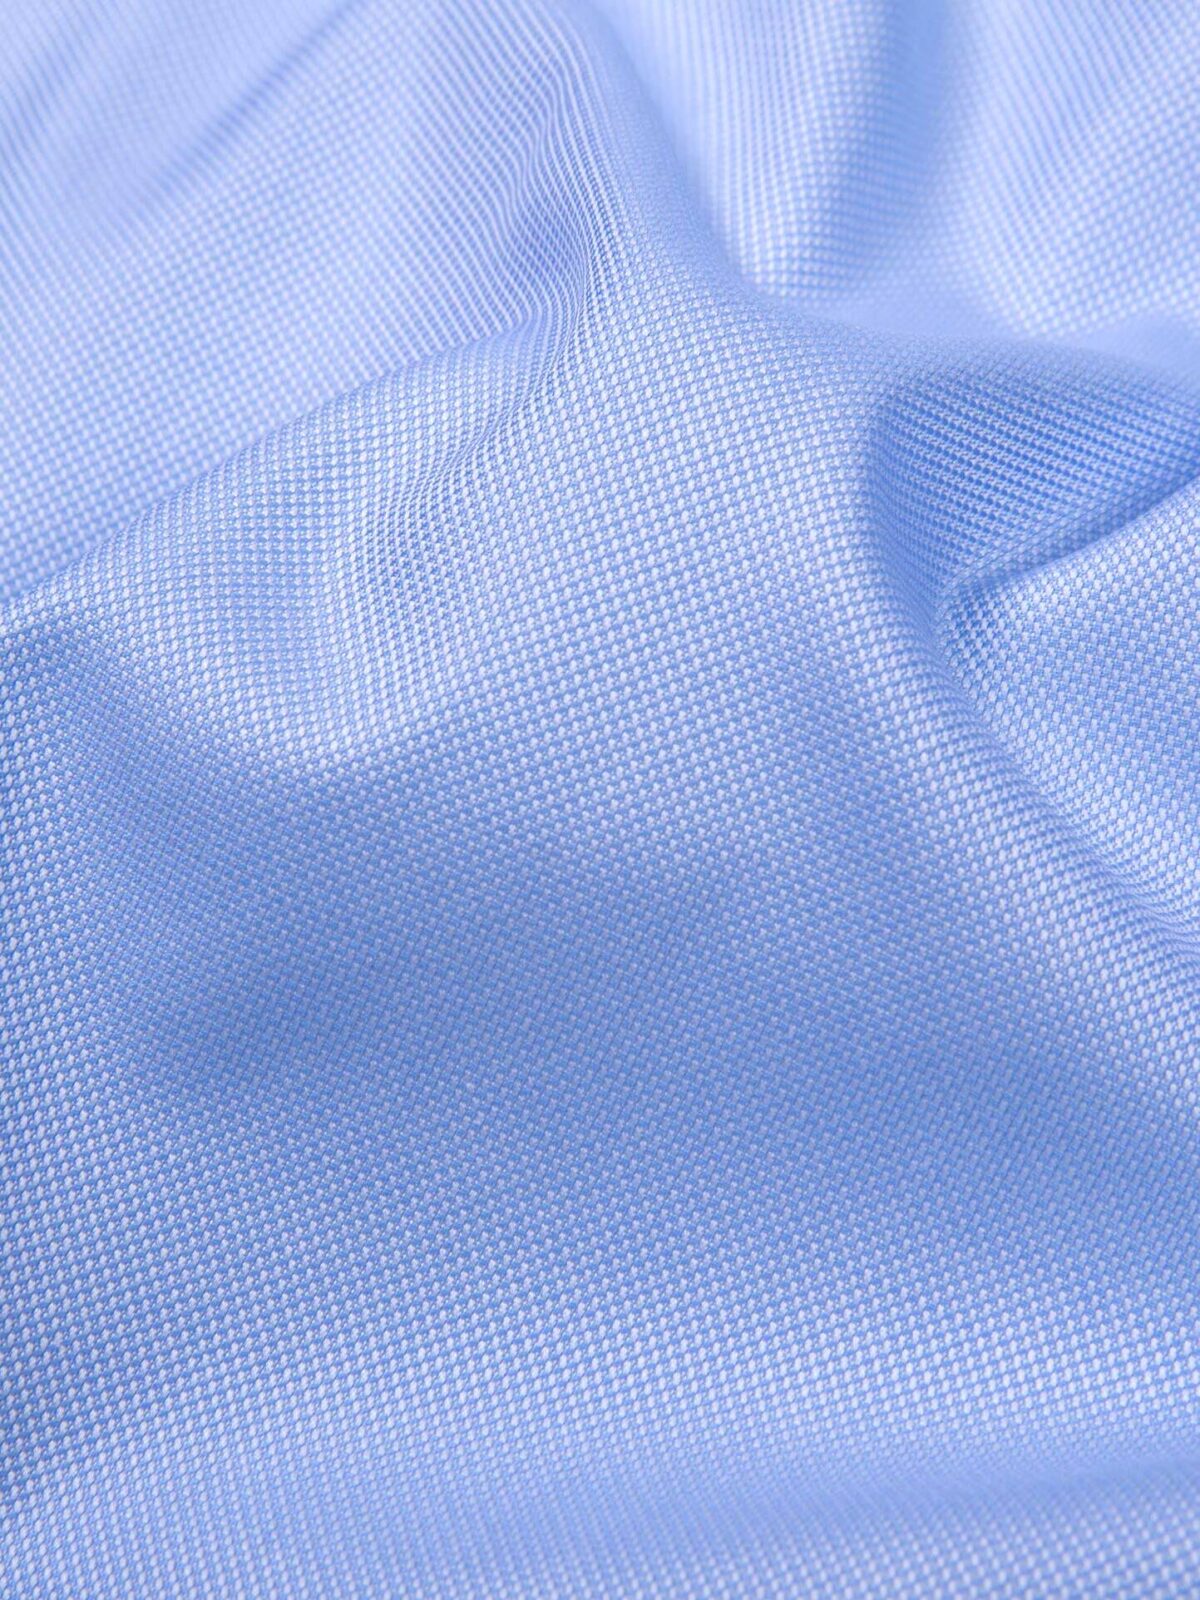 Thomas Mason Light Blue Royal Oxford Shirts by Proper Cloth